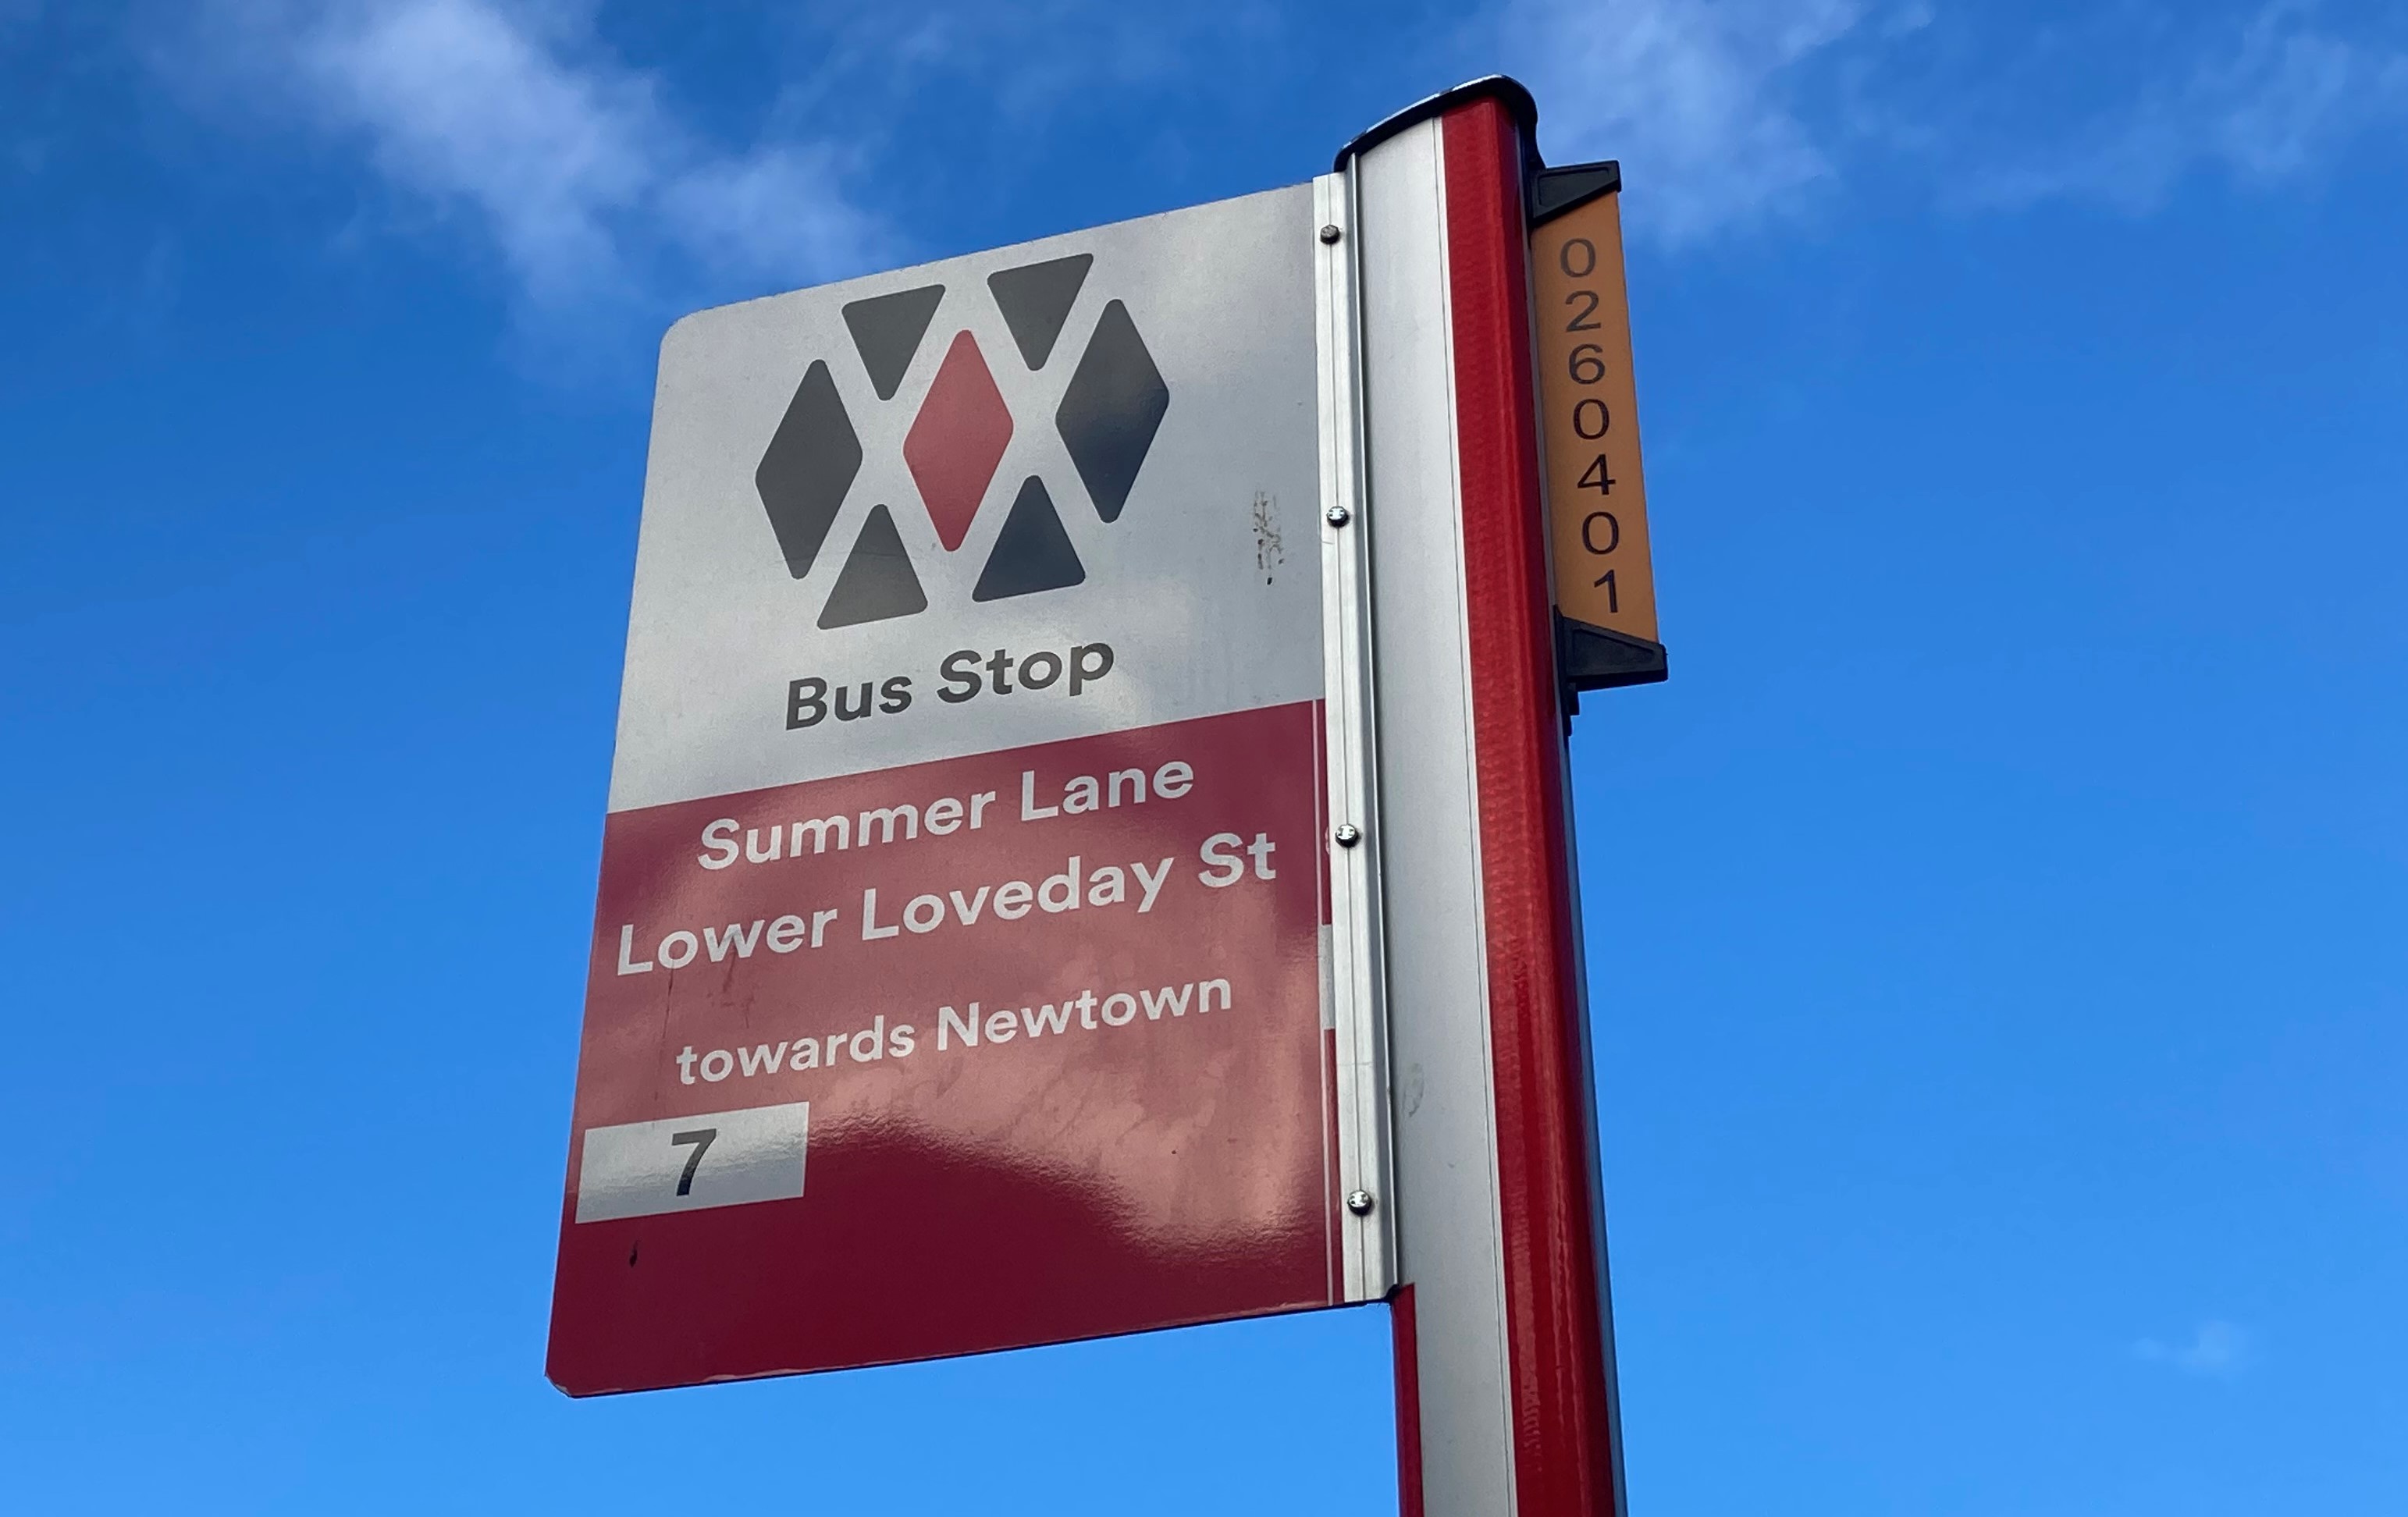 West Midlands Bus stop sign